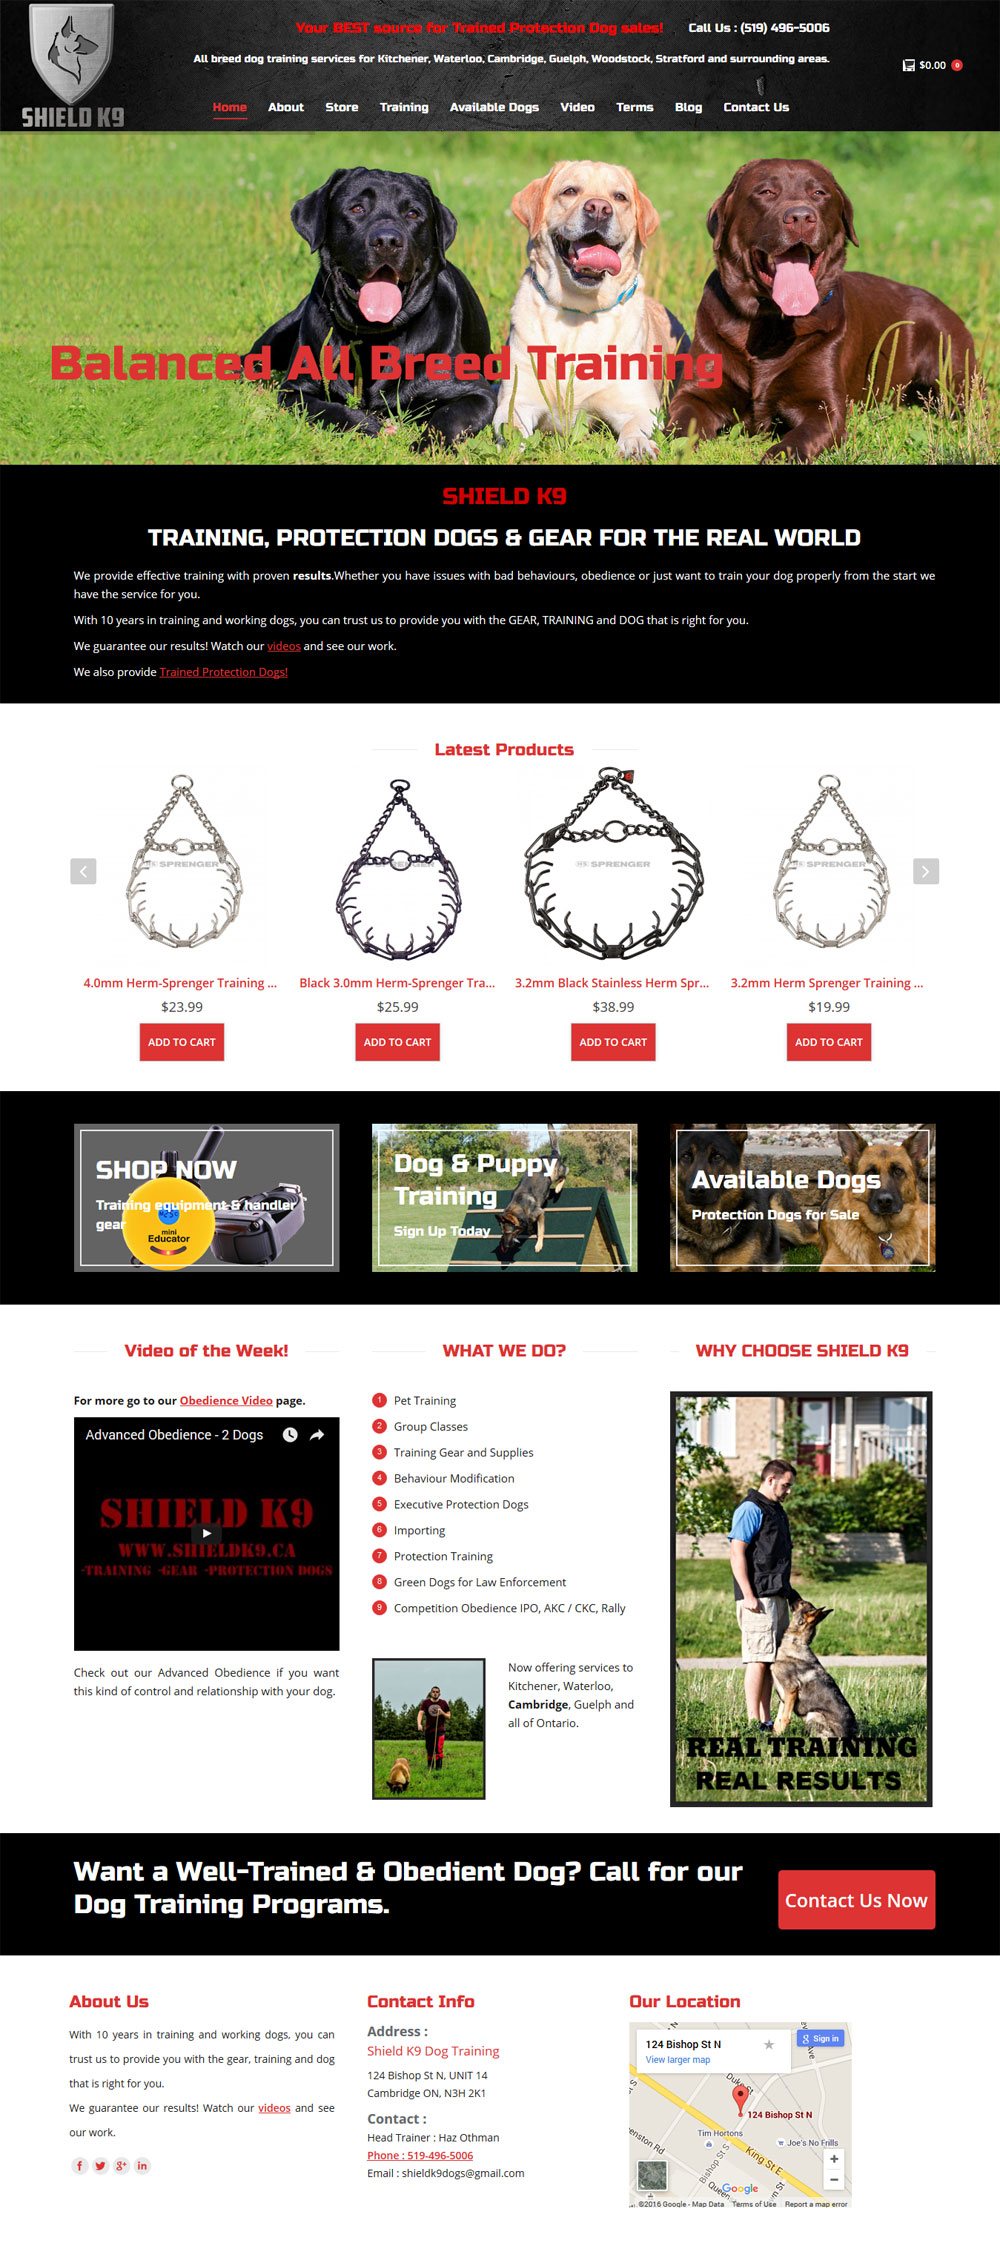 e-Commerce Website Design Services Halifax